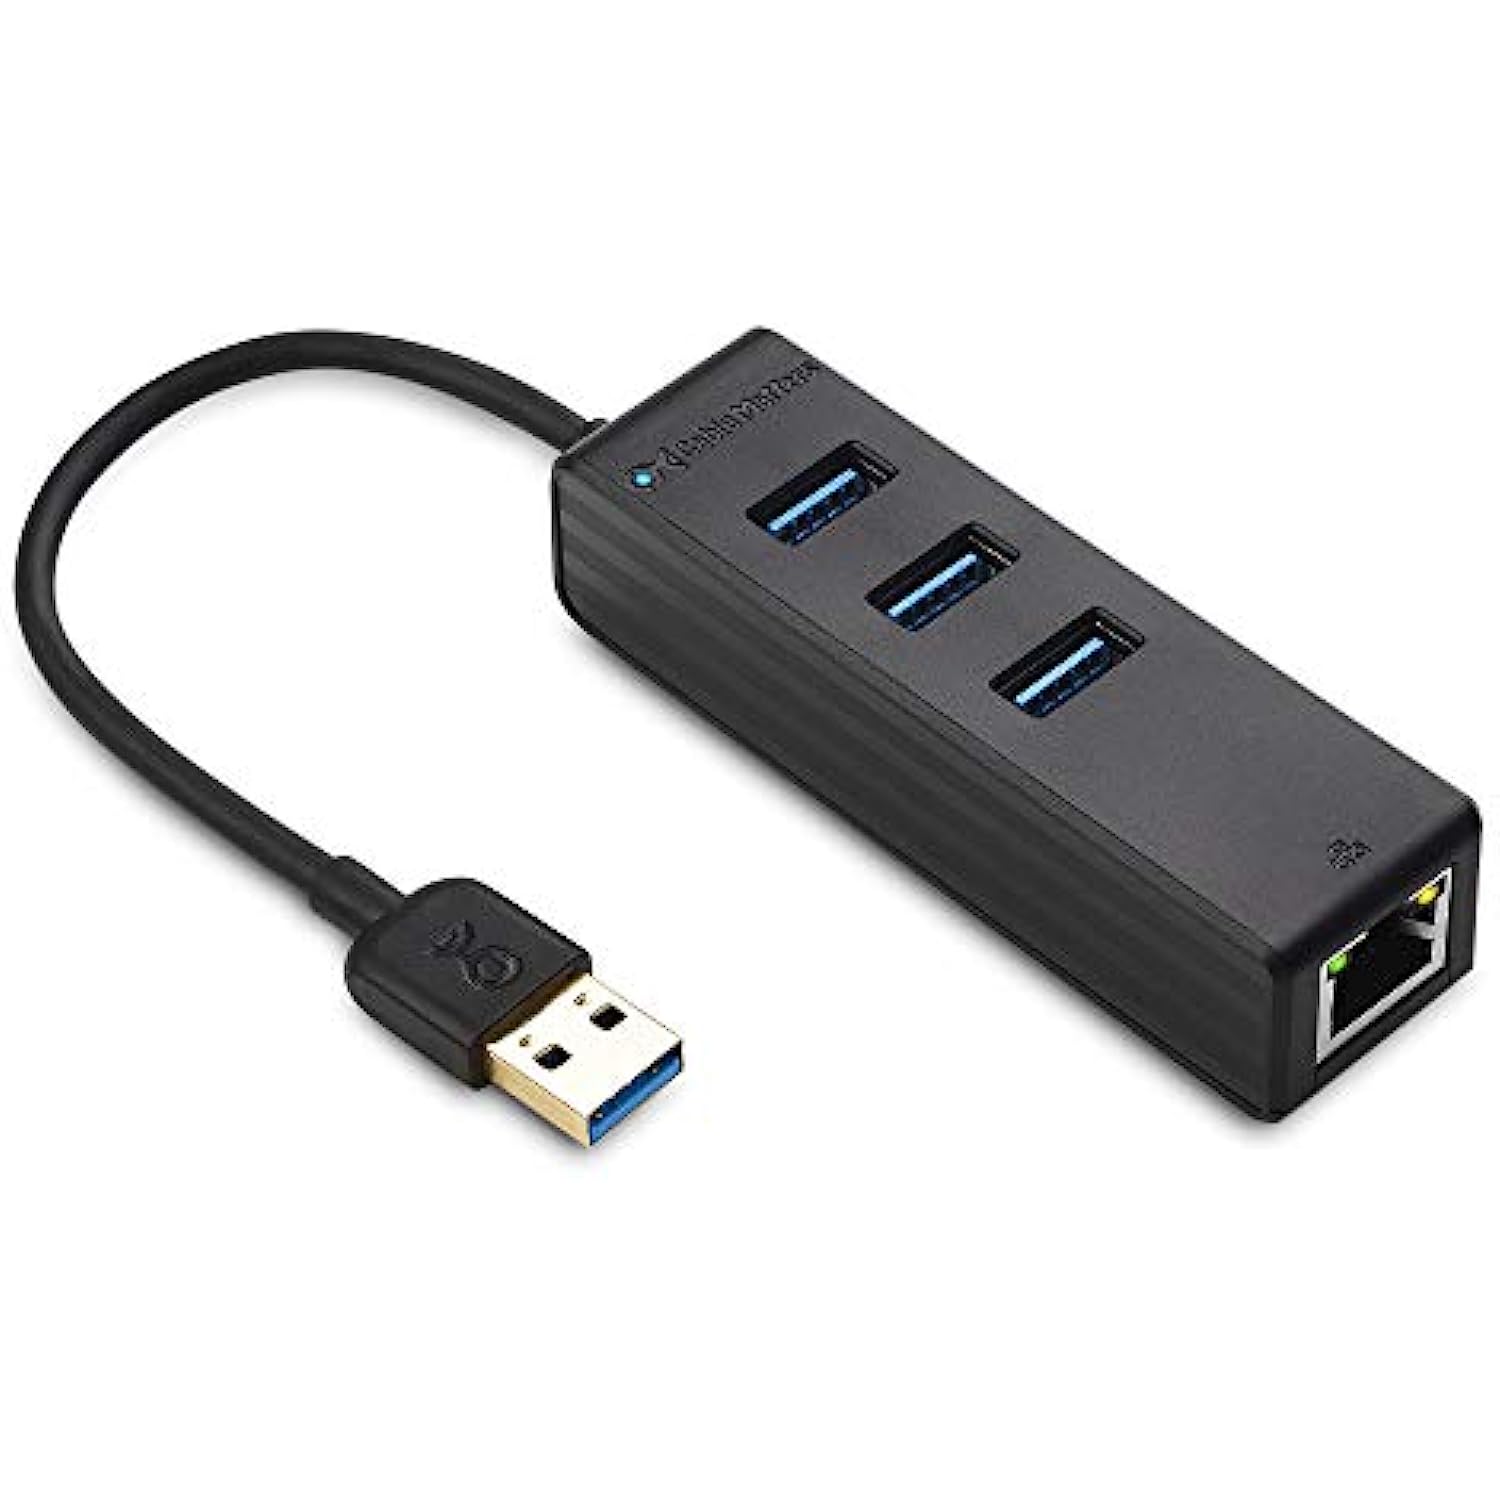 4-in-1 USB Hub Support Gigabit Ethernet (USB 3.0 Hub Ethernet, USB to Ethernet Adapter, Gigabit Ethernet USB Hub, USB Ethernet Hub) with 10/100/1000Mbps Network